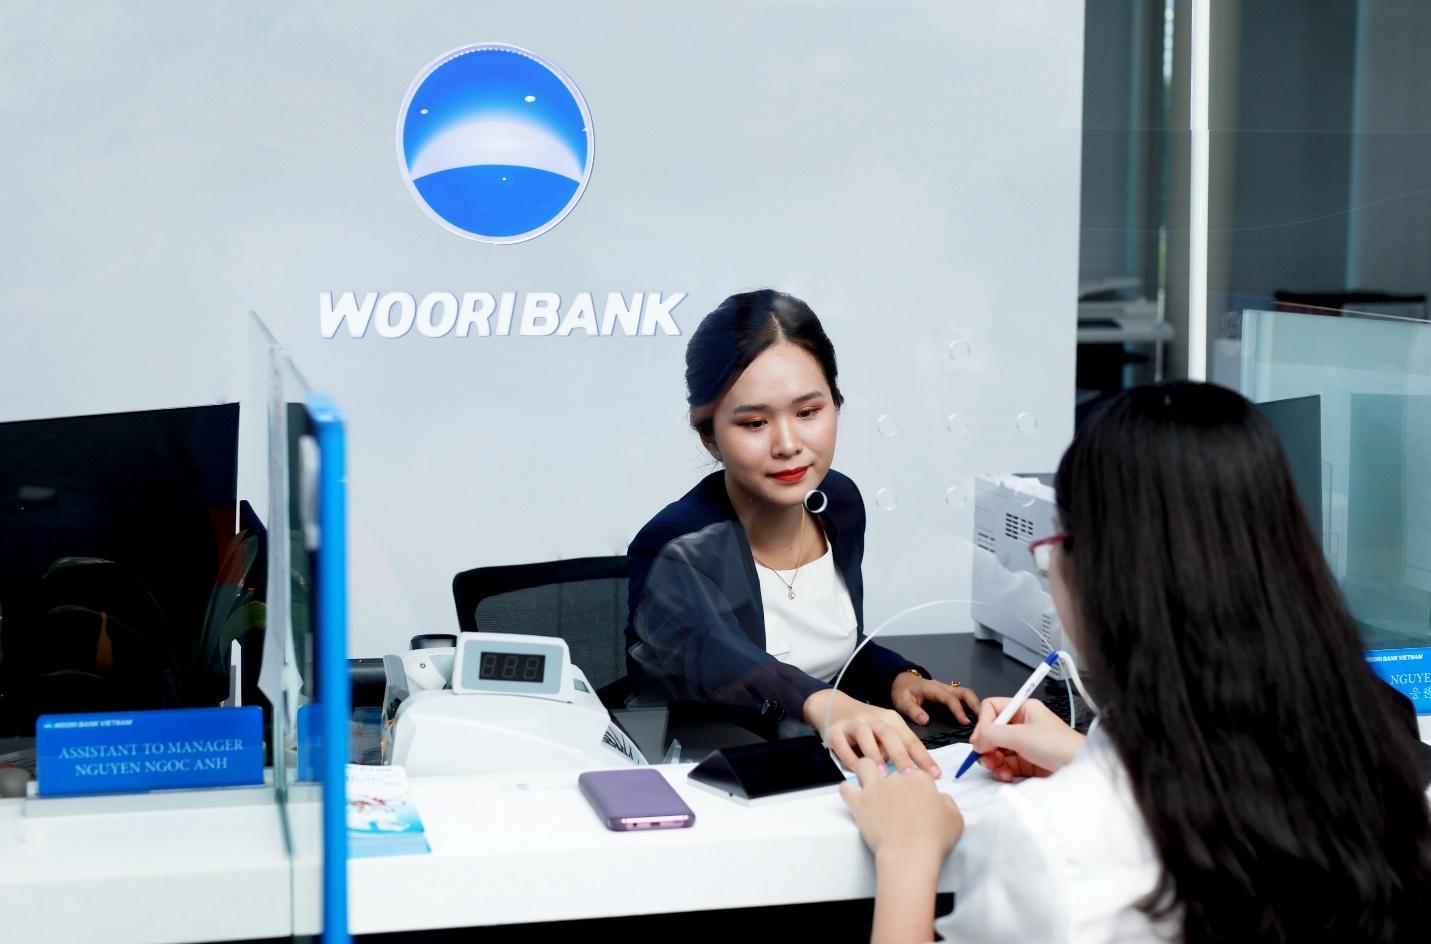 Woori-Bank